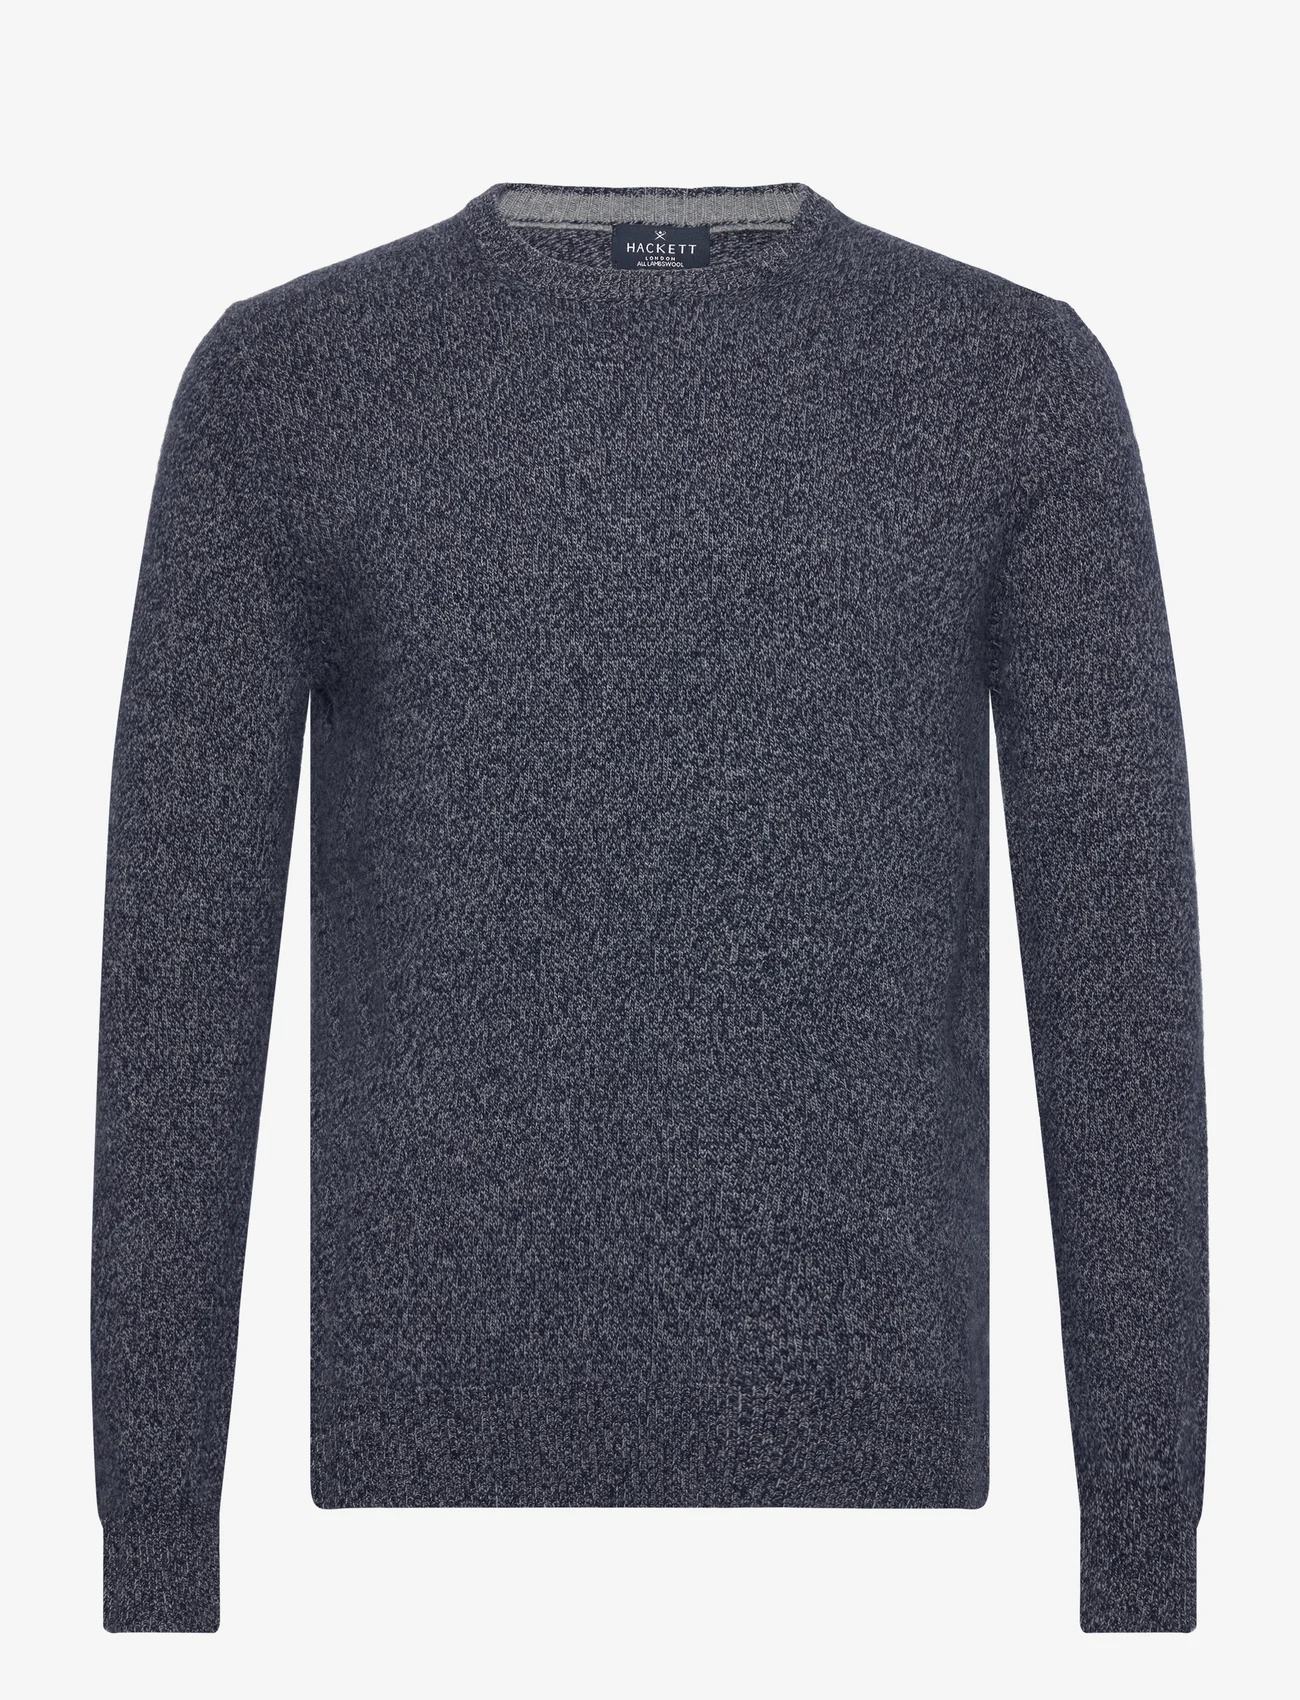 Hackett London - LW MOULINE CREW - megztinis su apvalios formos apykakle - navy/grey - 0